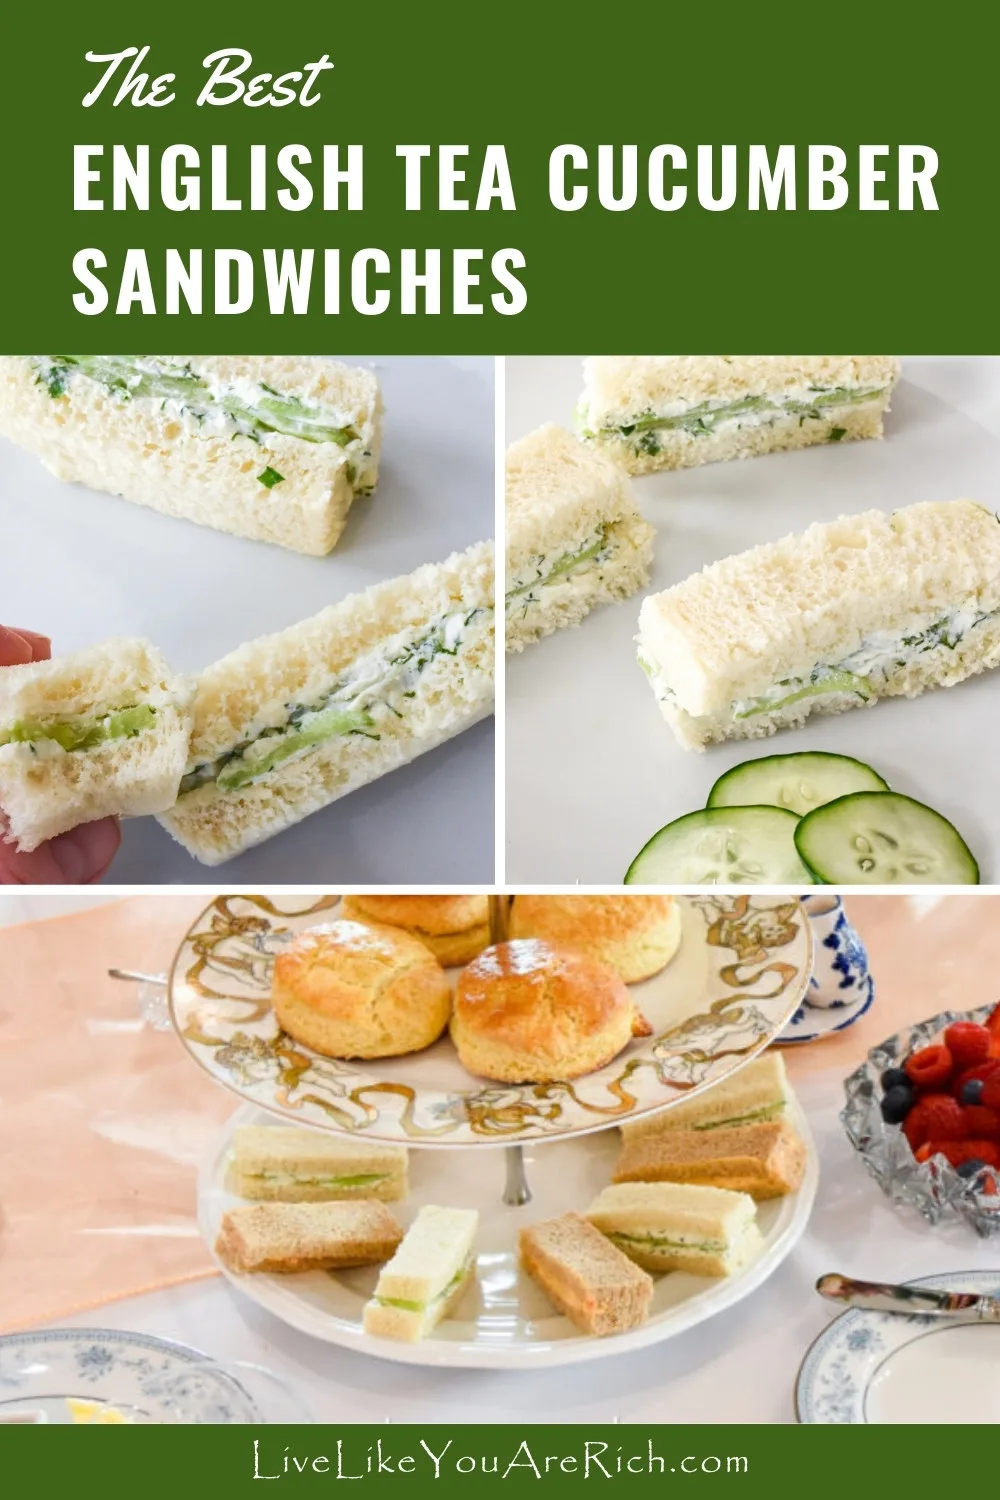 The Best English Tea Cucumber Sandwiches Recipe